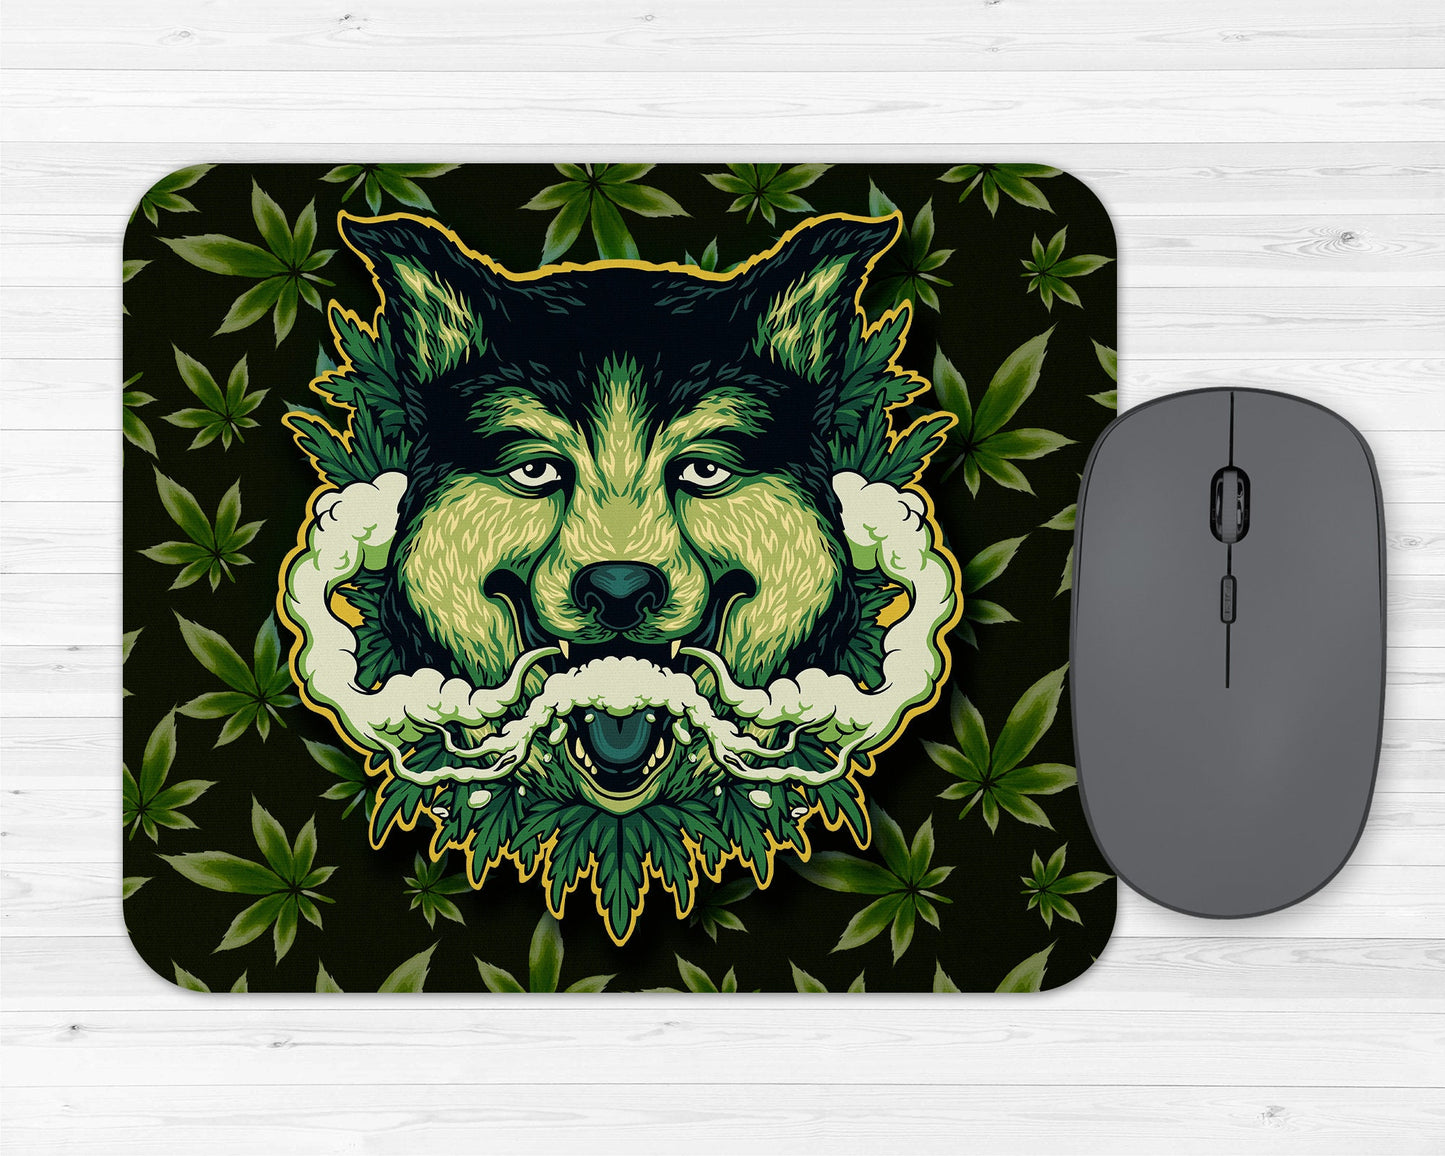 Stoner Art Pothead Cannabis Marijuana Rubber Mousepads - 10 Different Designs